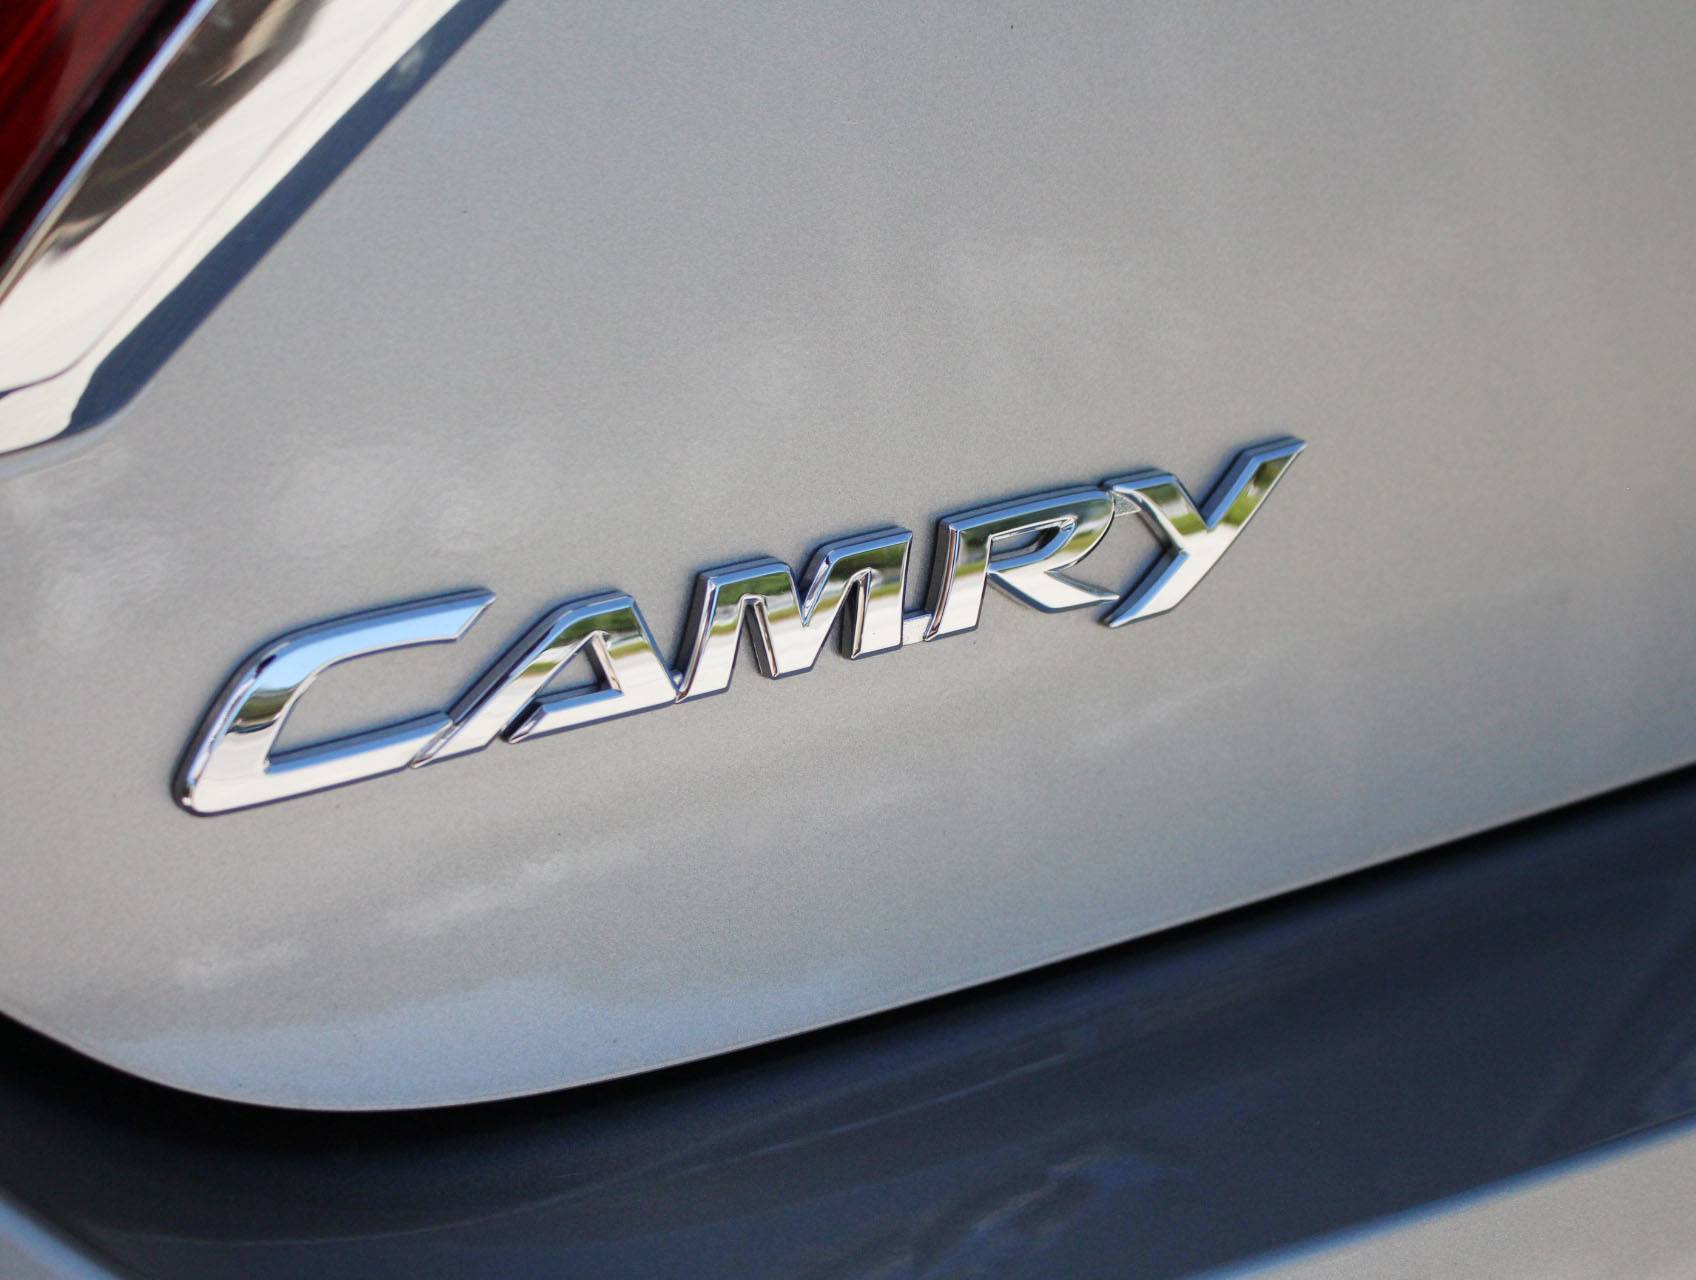 Florida Fine Cars - Used TOYOTA CAMRY 2015 MARGATE Le Hybrid